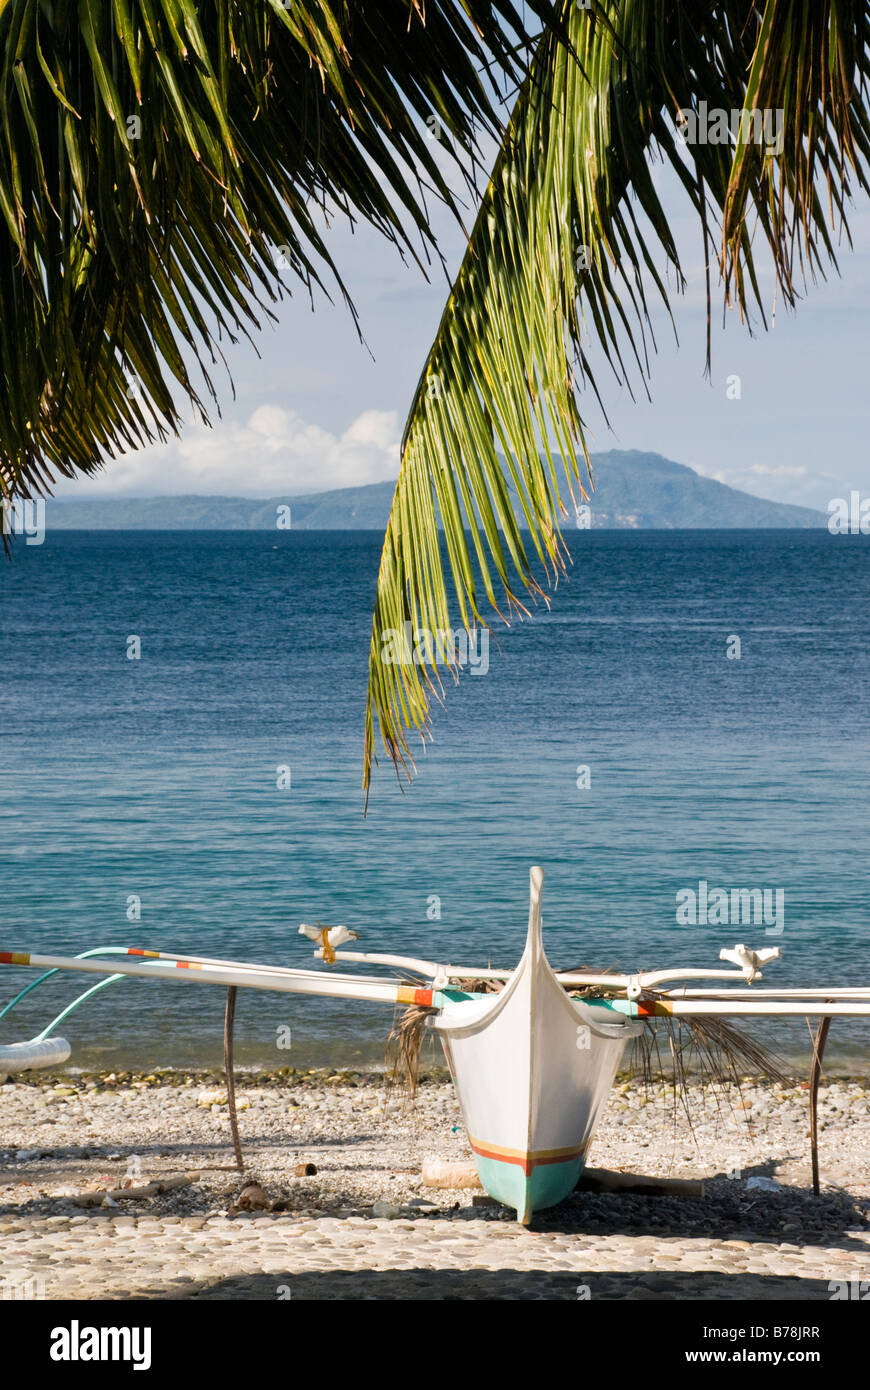 Filipino boat (bangka) on stony beach with palm tree in foreground, Malabrigo, Batangas, Philippines Stock Photo